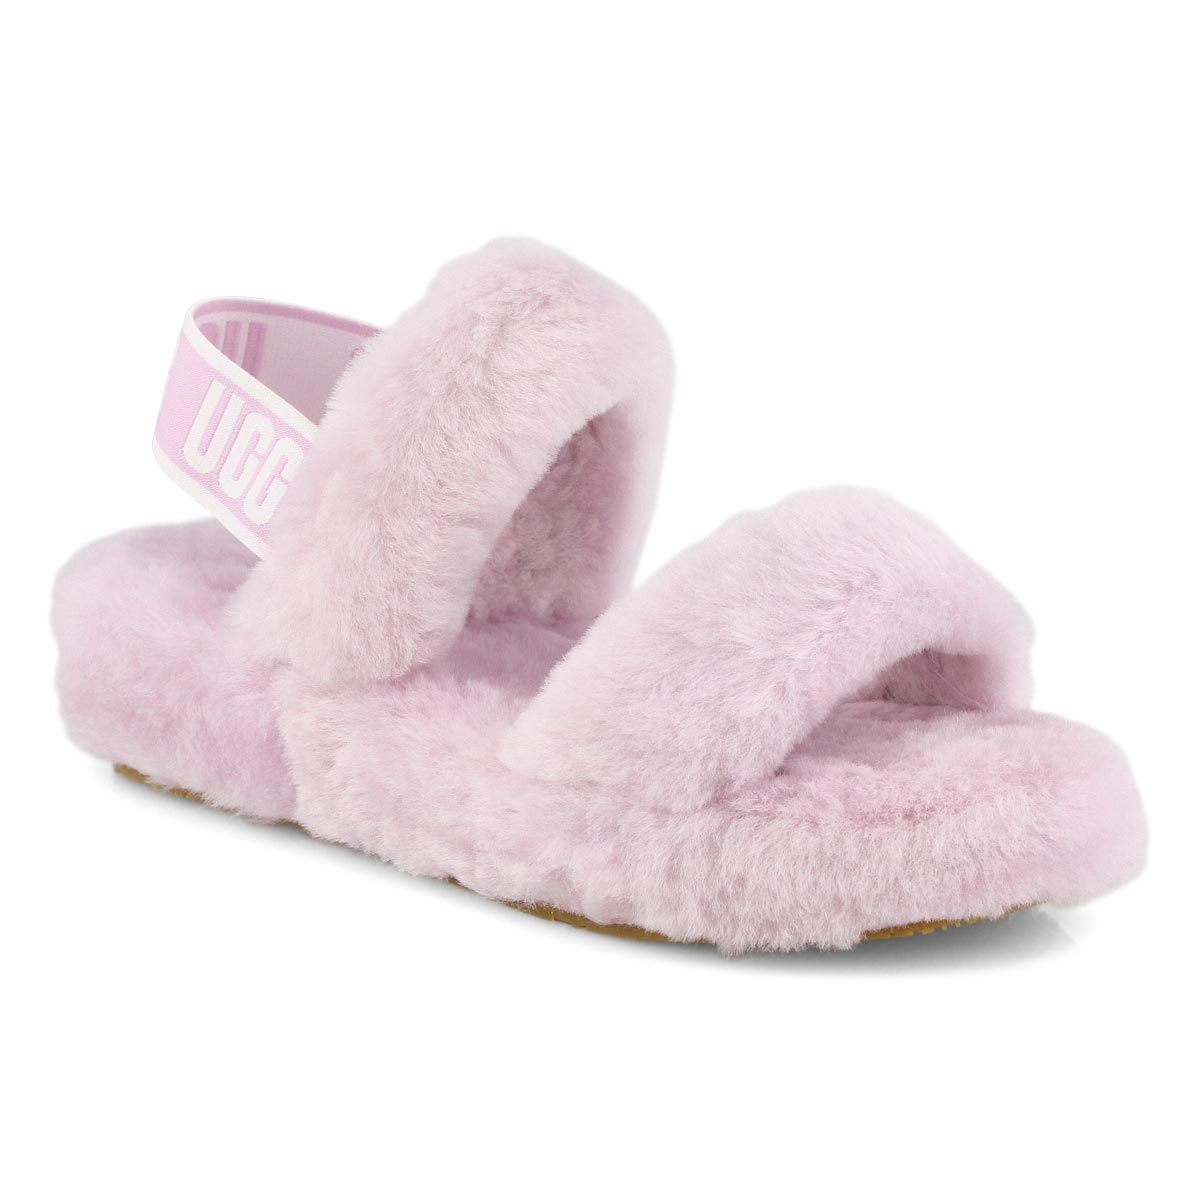 purple uggs slippers